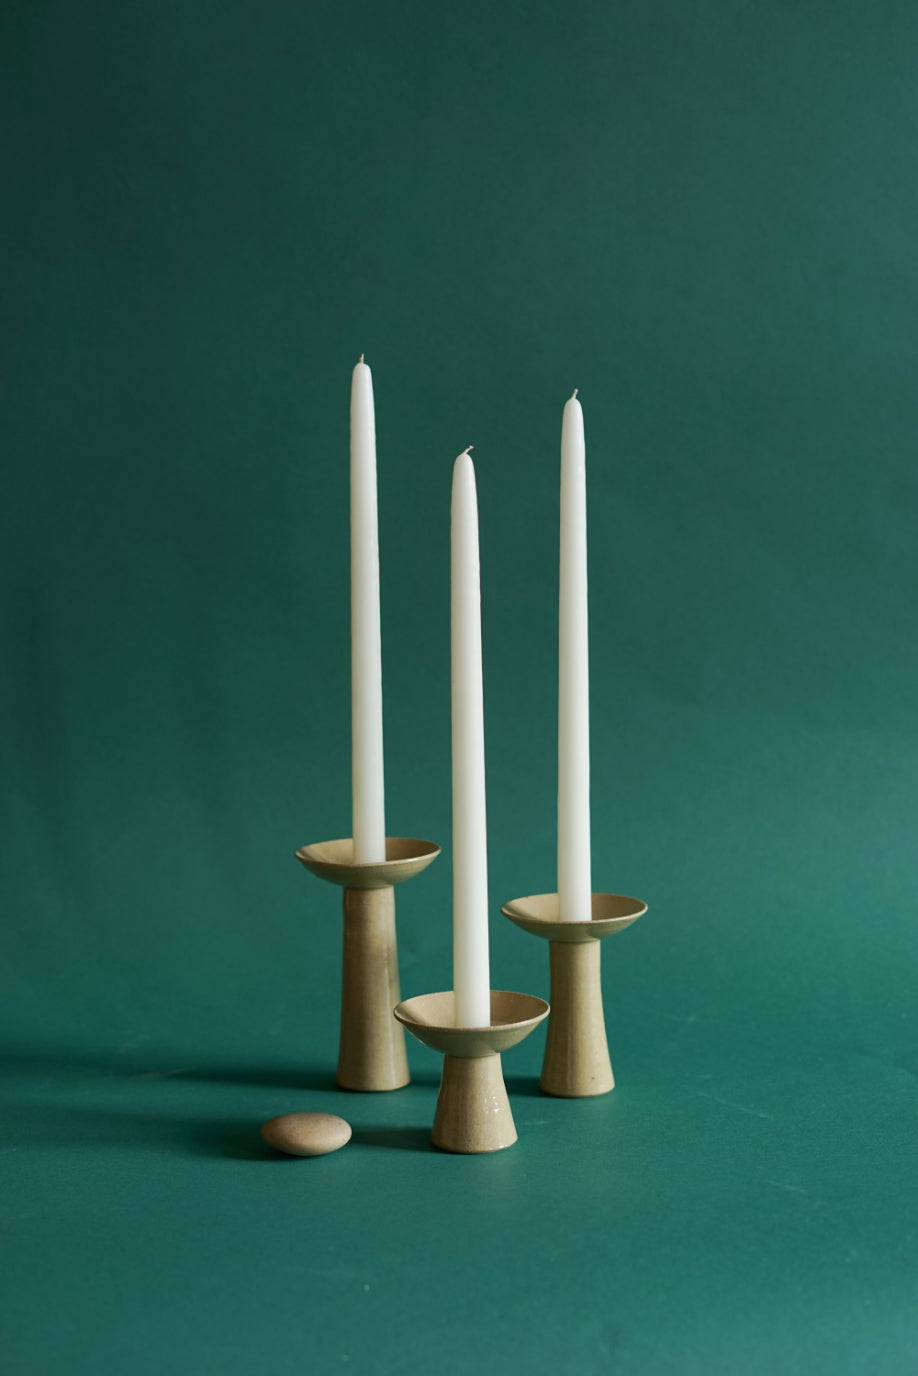 Three ceramic candlesticks by Cara Guthrie. Shot against a deep green backdrop at Bard Scotland.